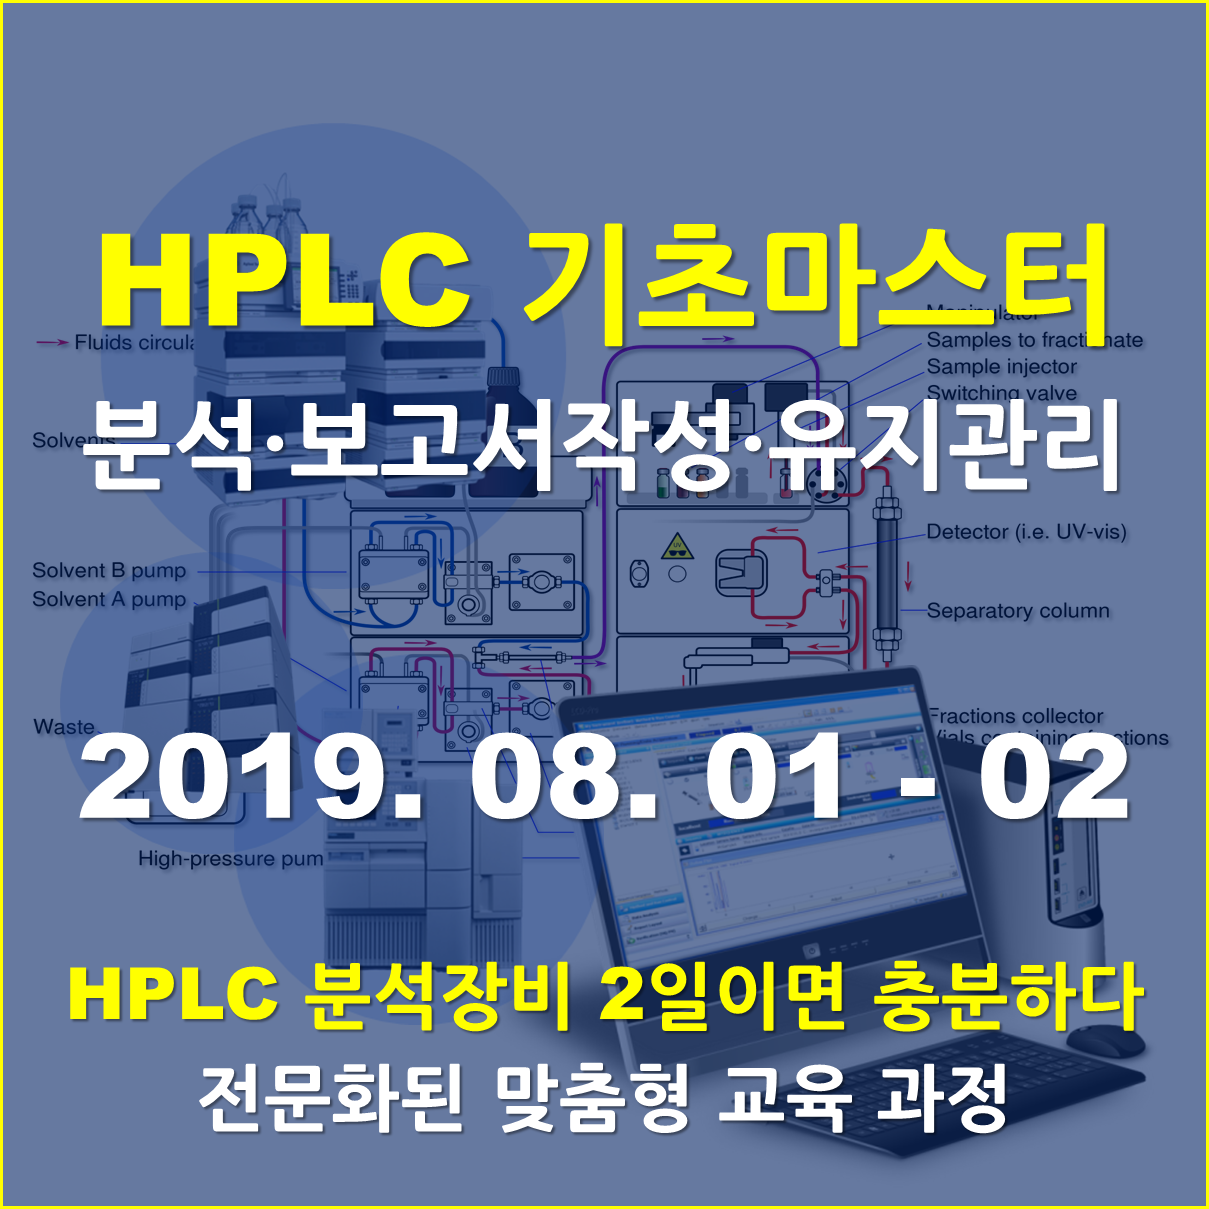 HPLC 기초 마스터 - 분석/보고서작성/유지관리 (2일 과정)